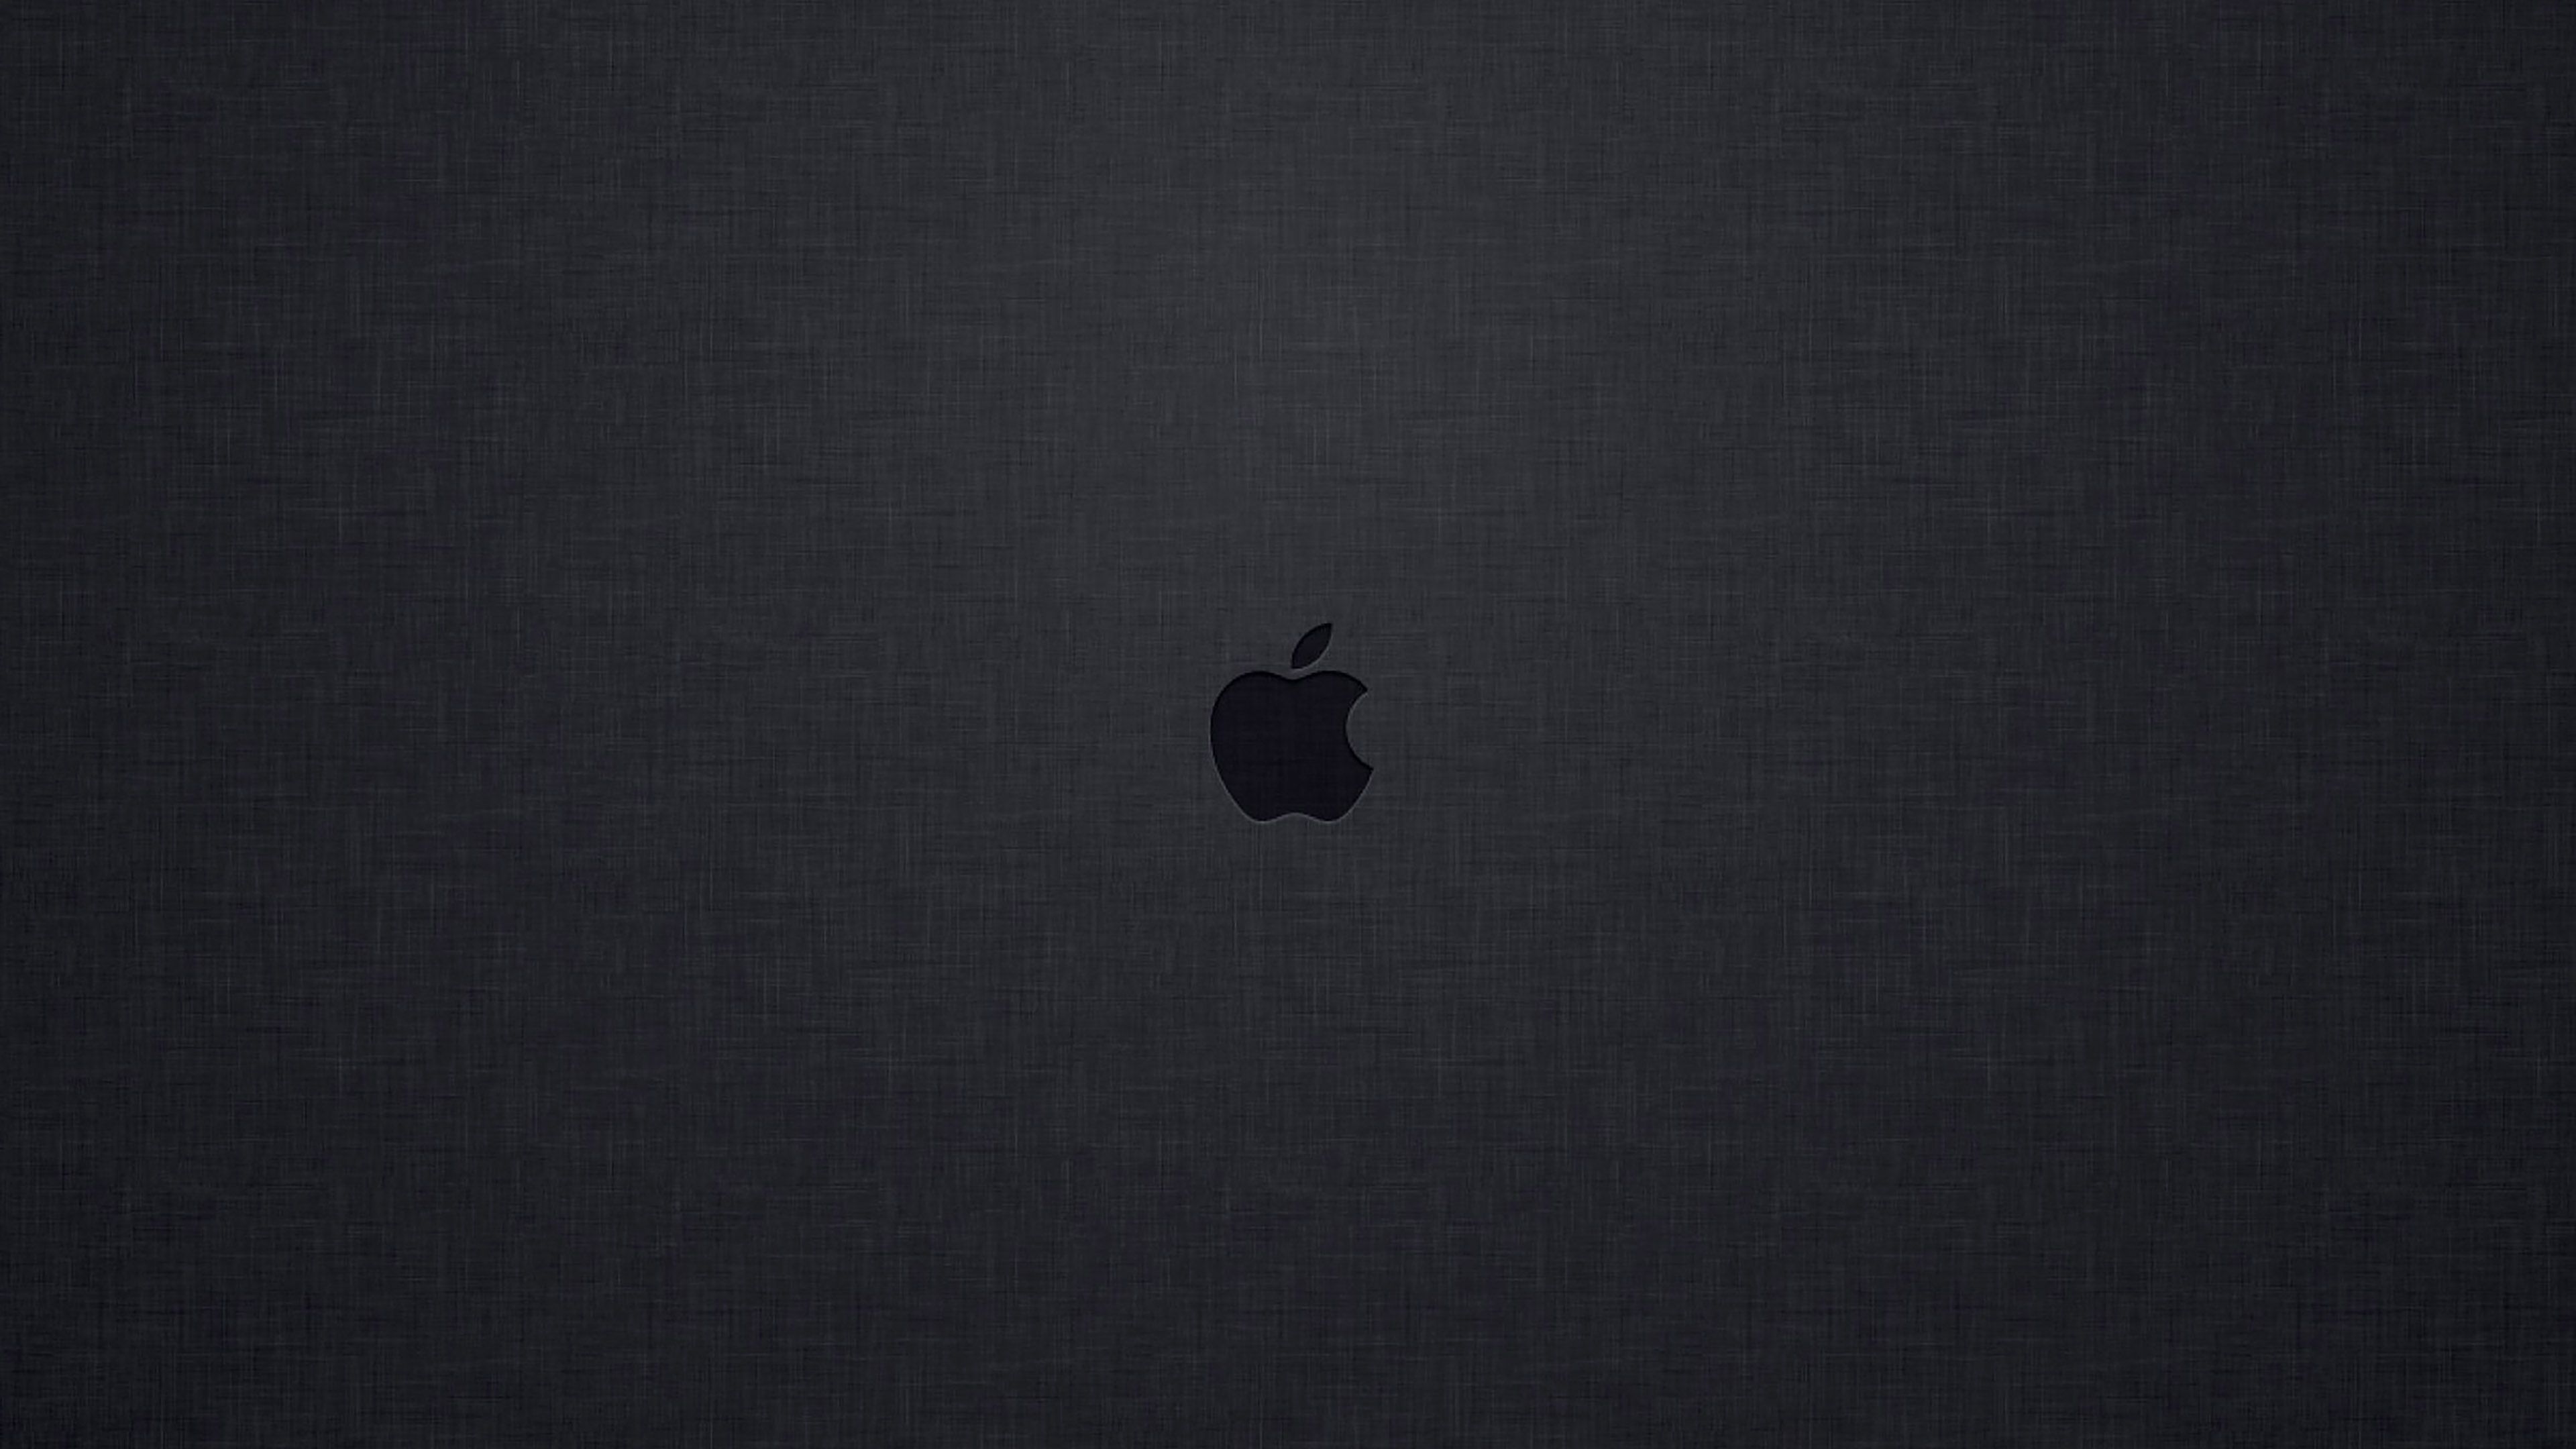 Space black Apple Watch over black iPhone X photo  Free Grey Image on  Unsplash